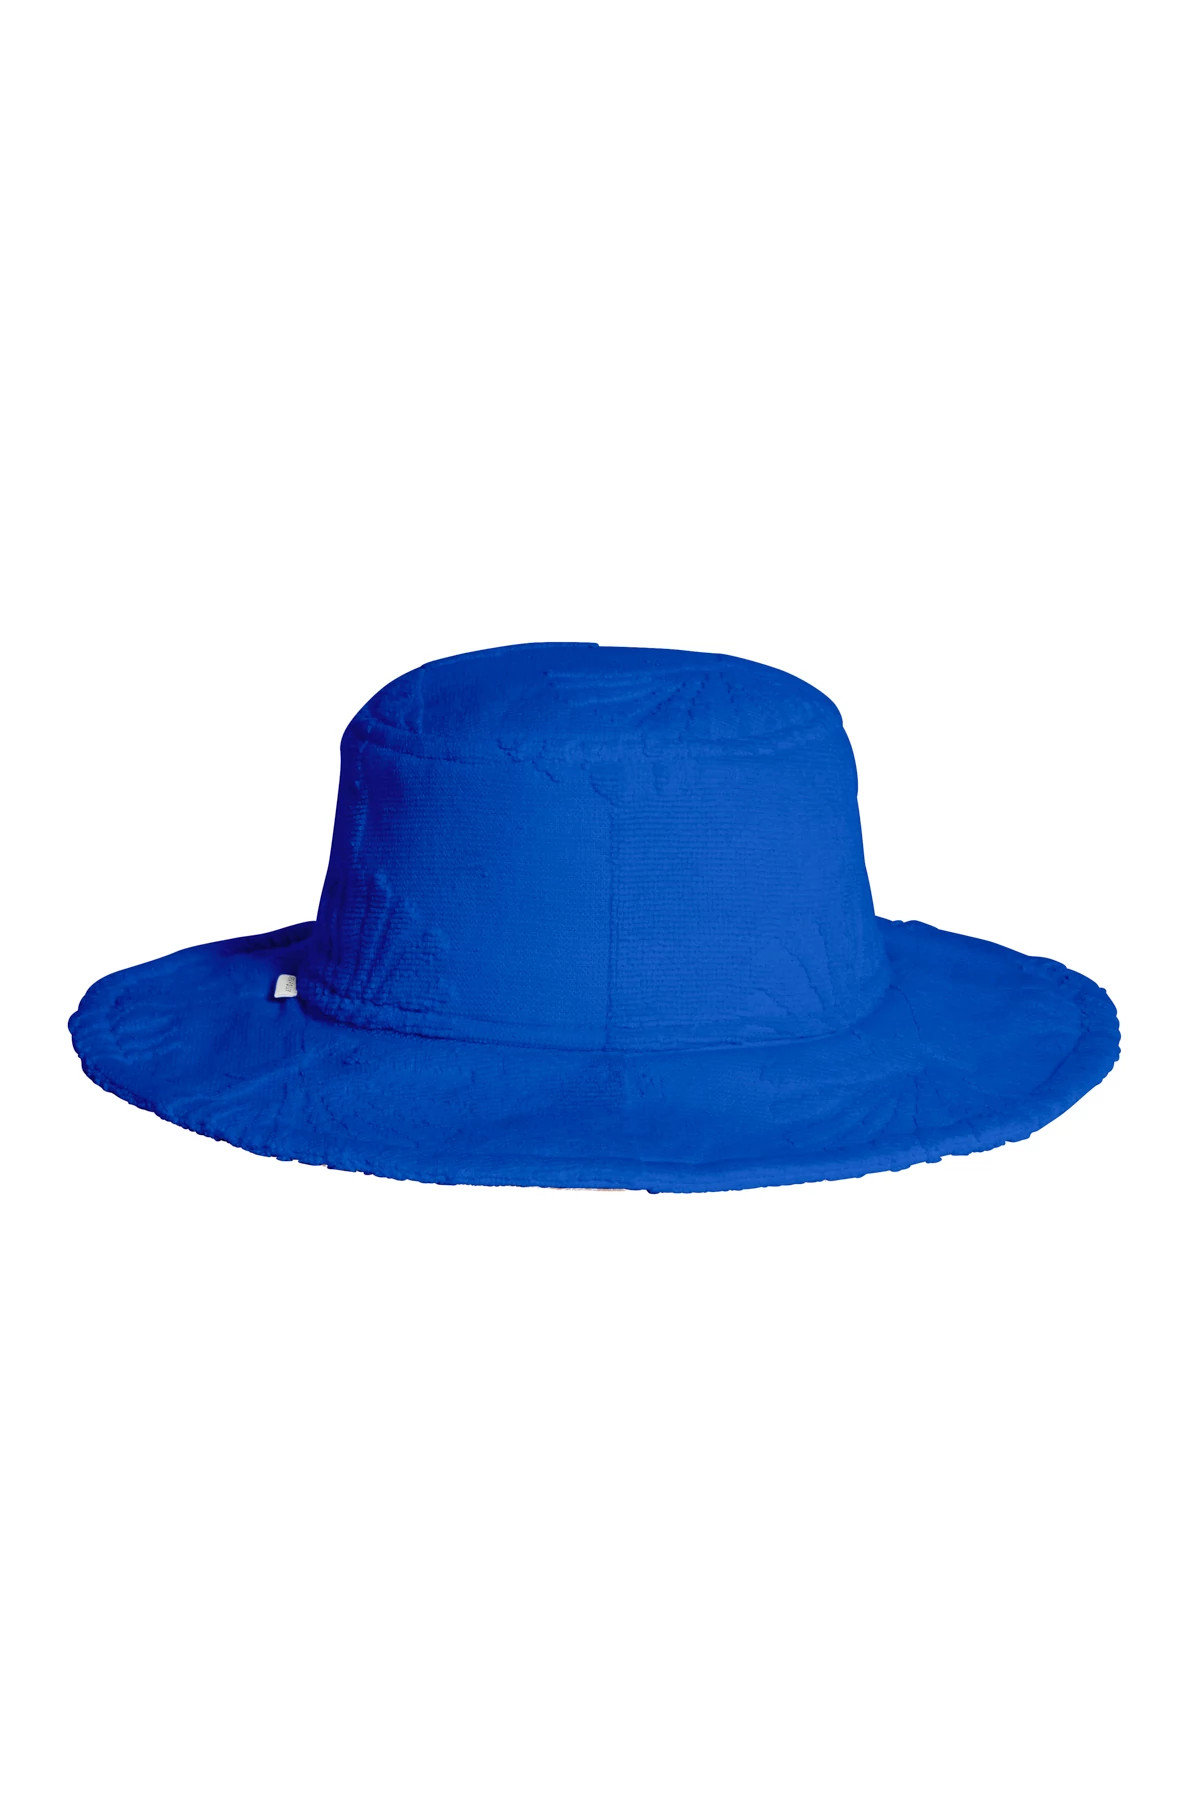 AZURE Ahoy Bucket Hat image number 1